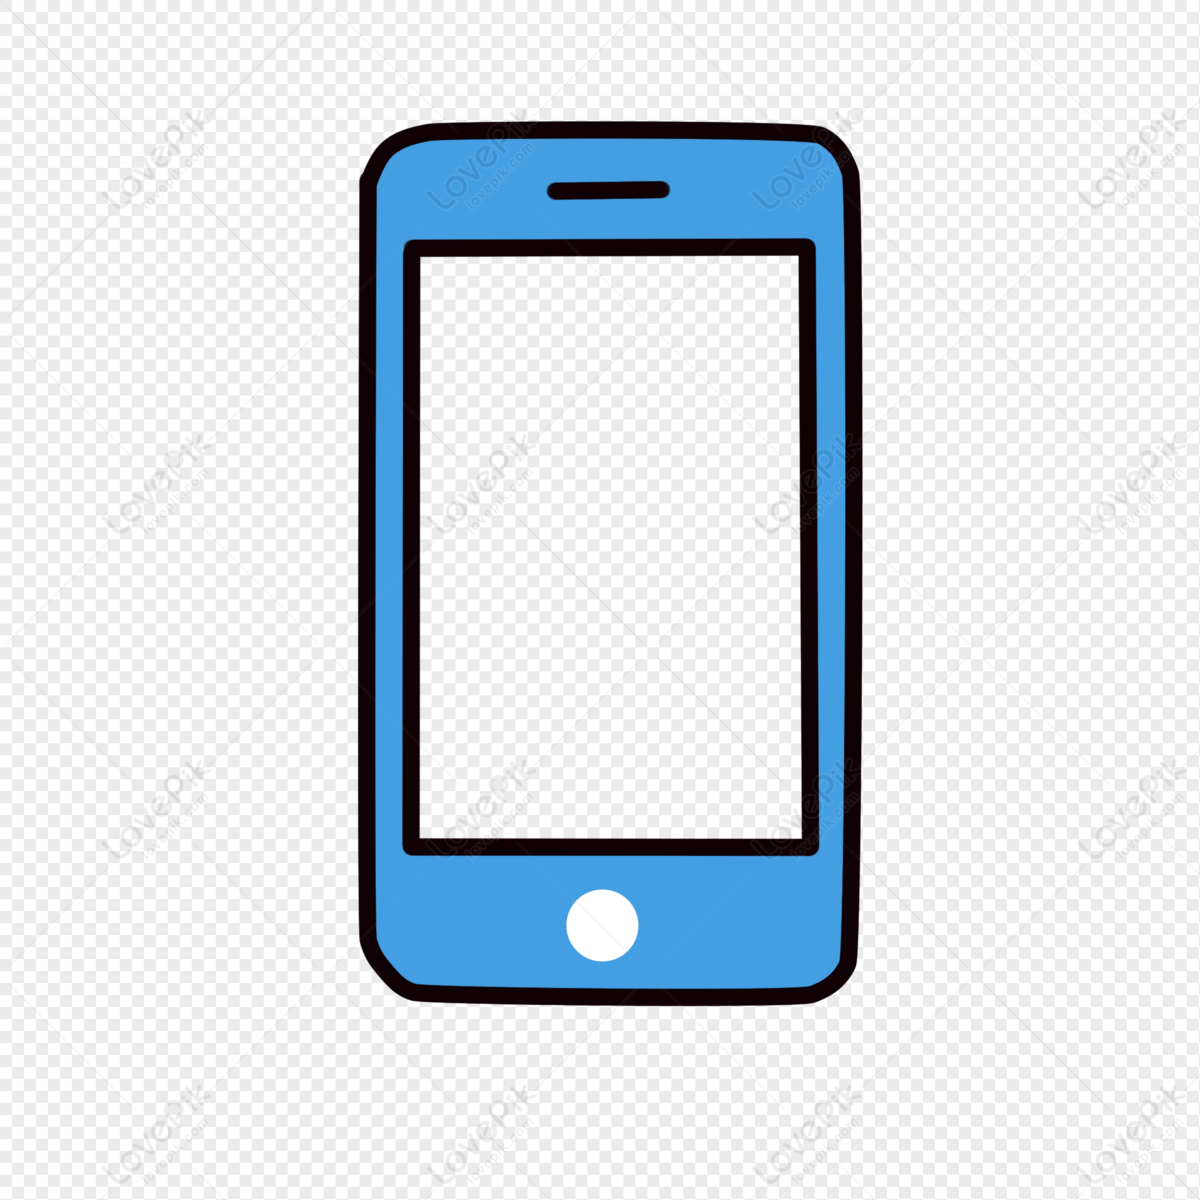 Phone Logo PNG Images, Transparent Phone Logo Image Download - PNGitem